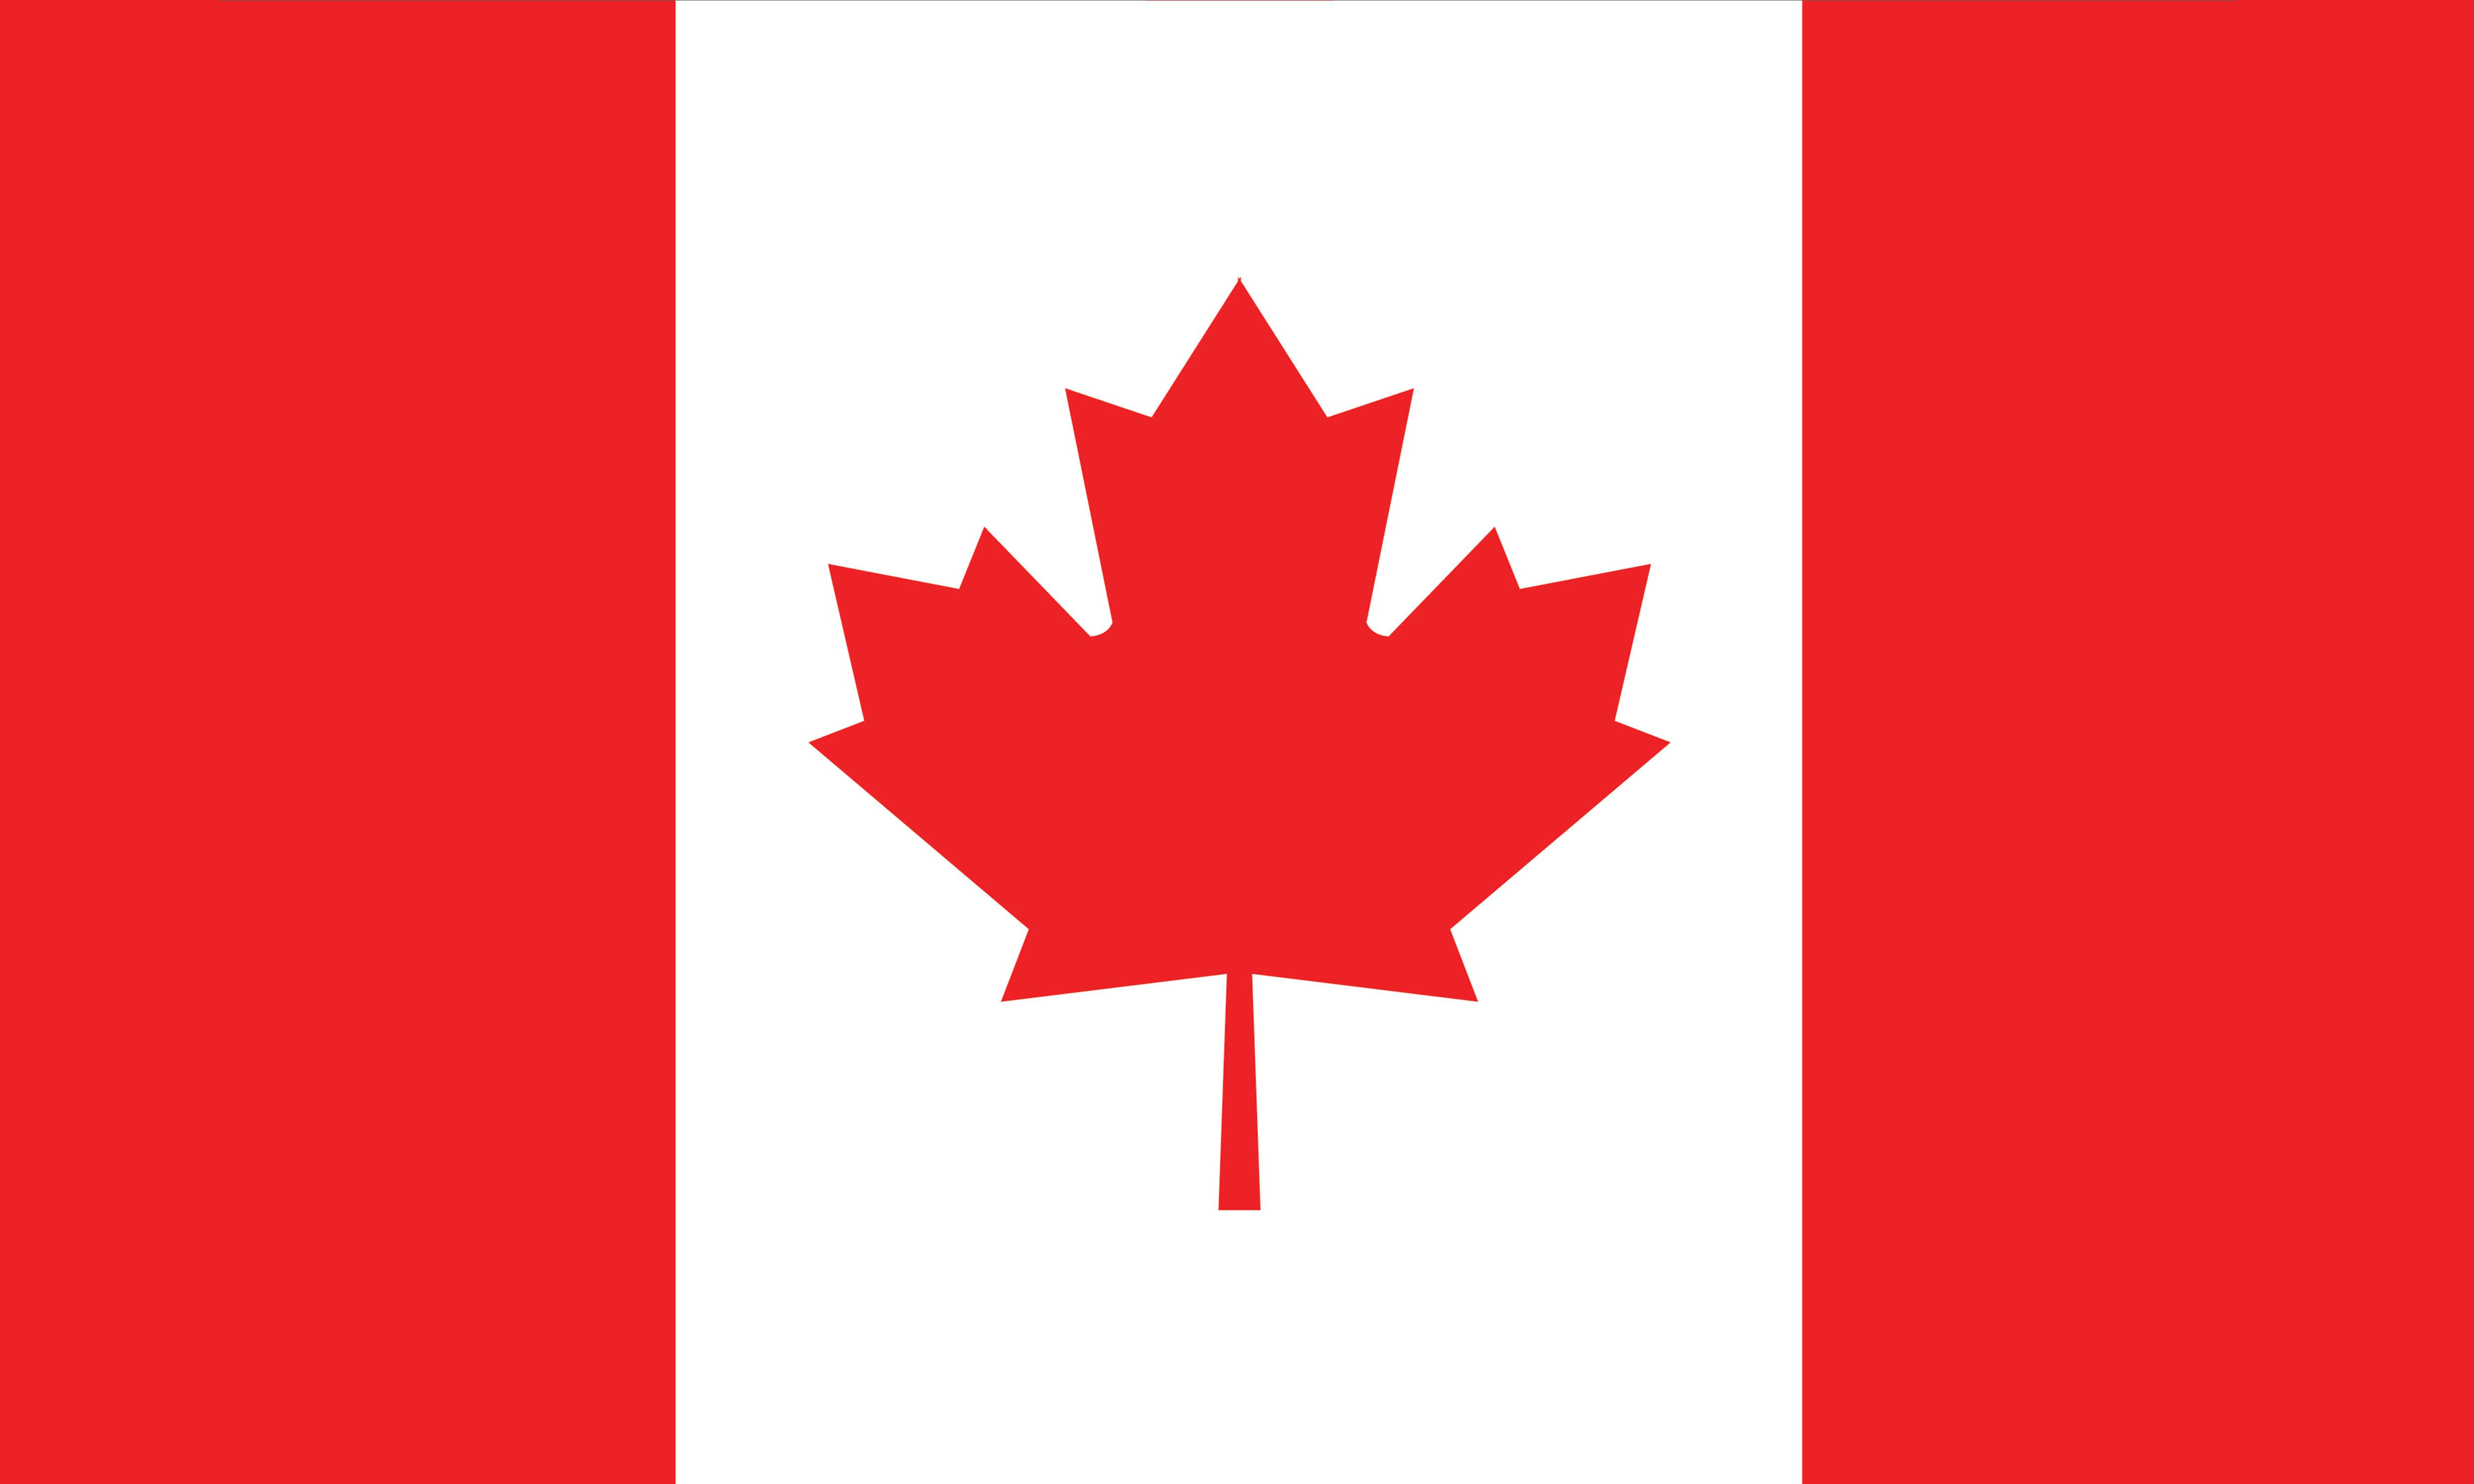 In Canada